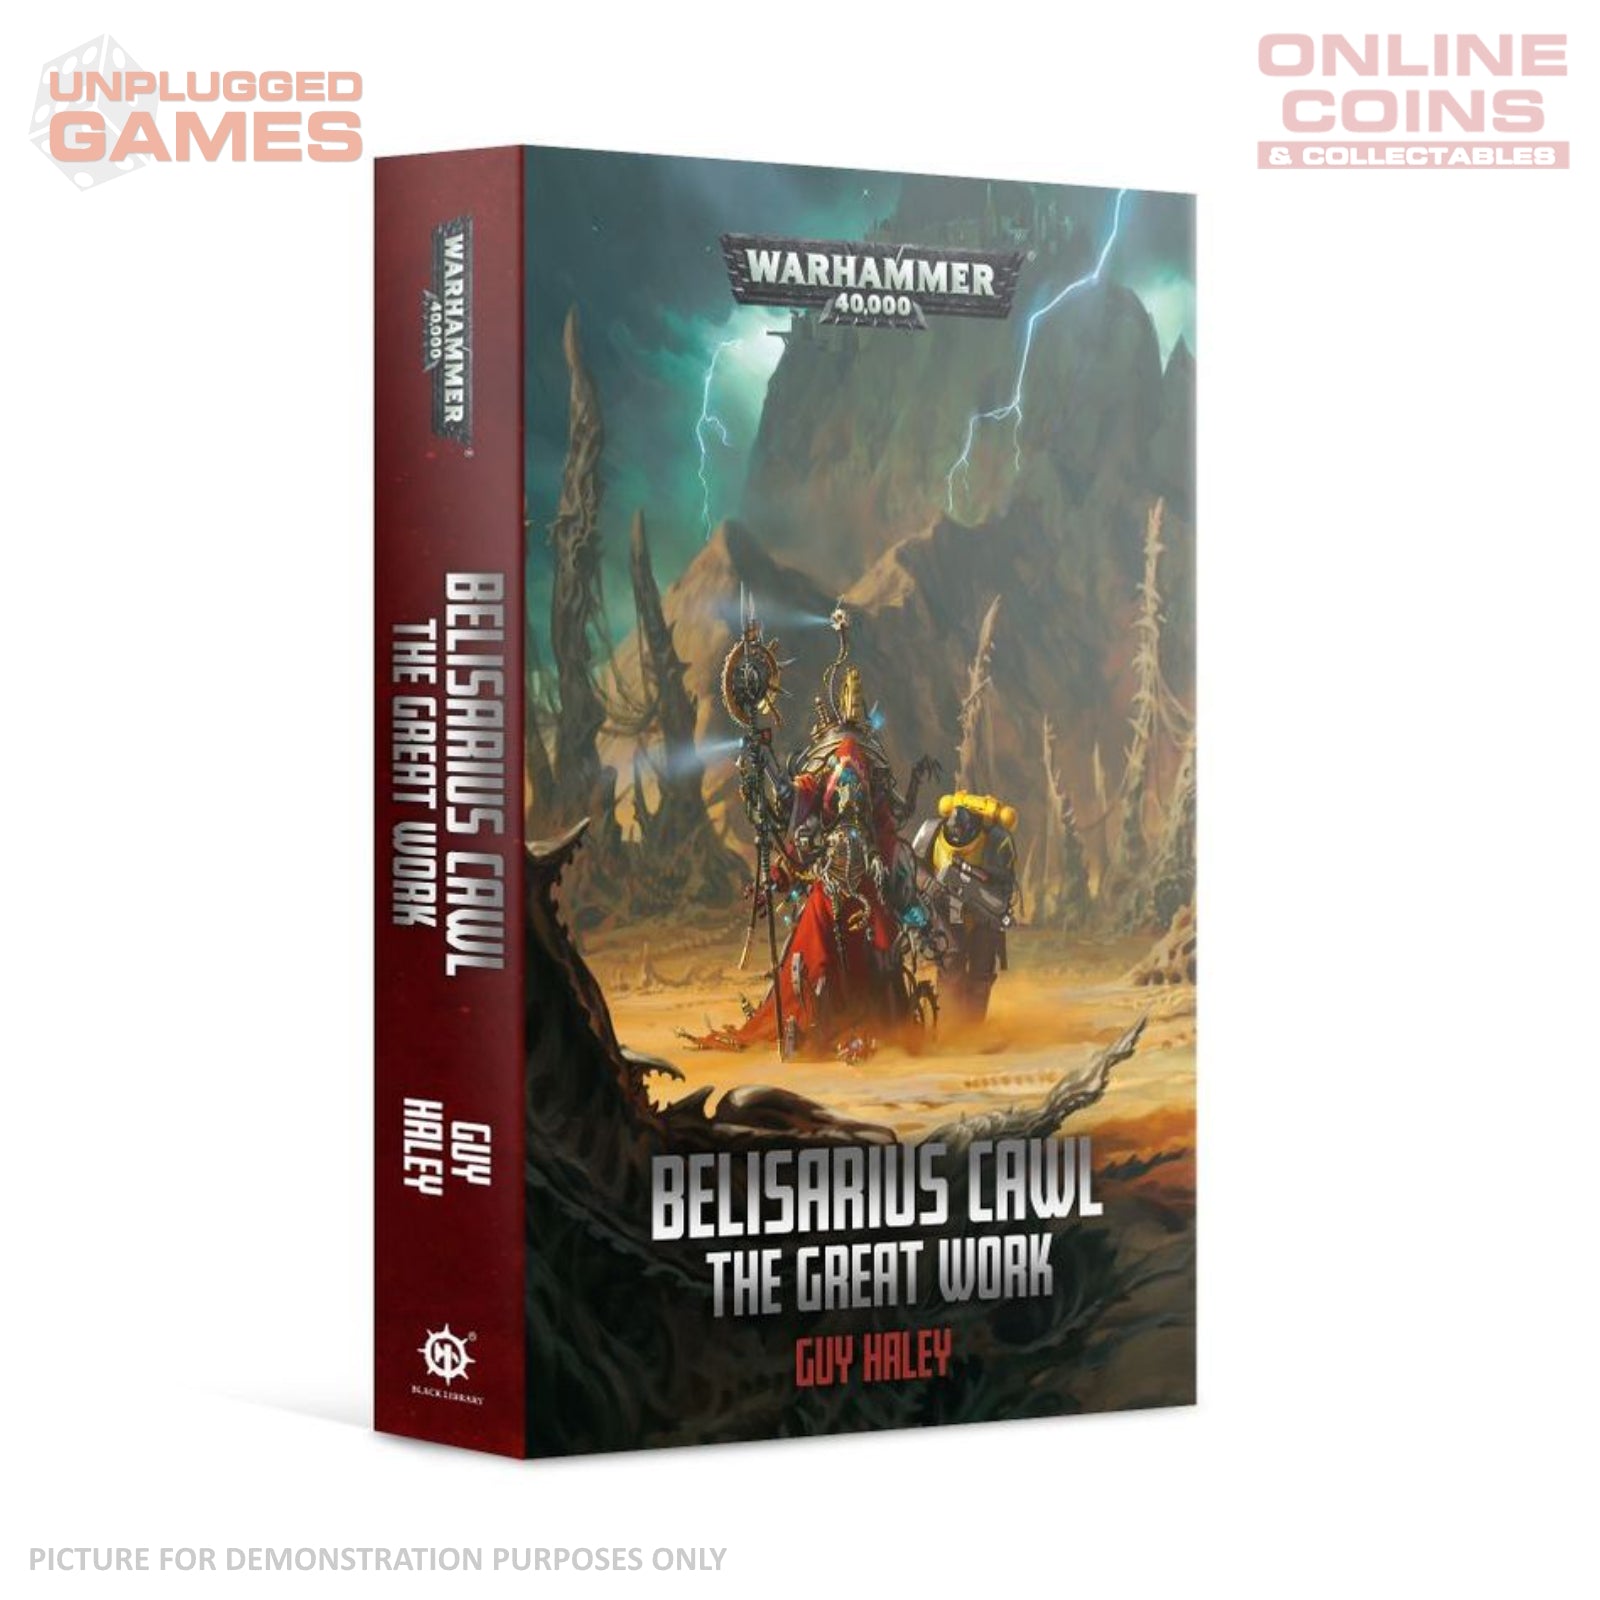 Warhammer 40,000 - Belisarius Cawl The Great Work